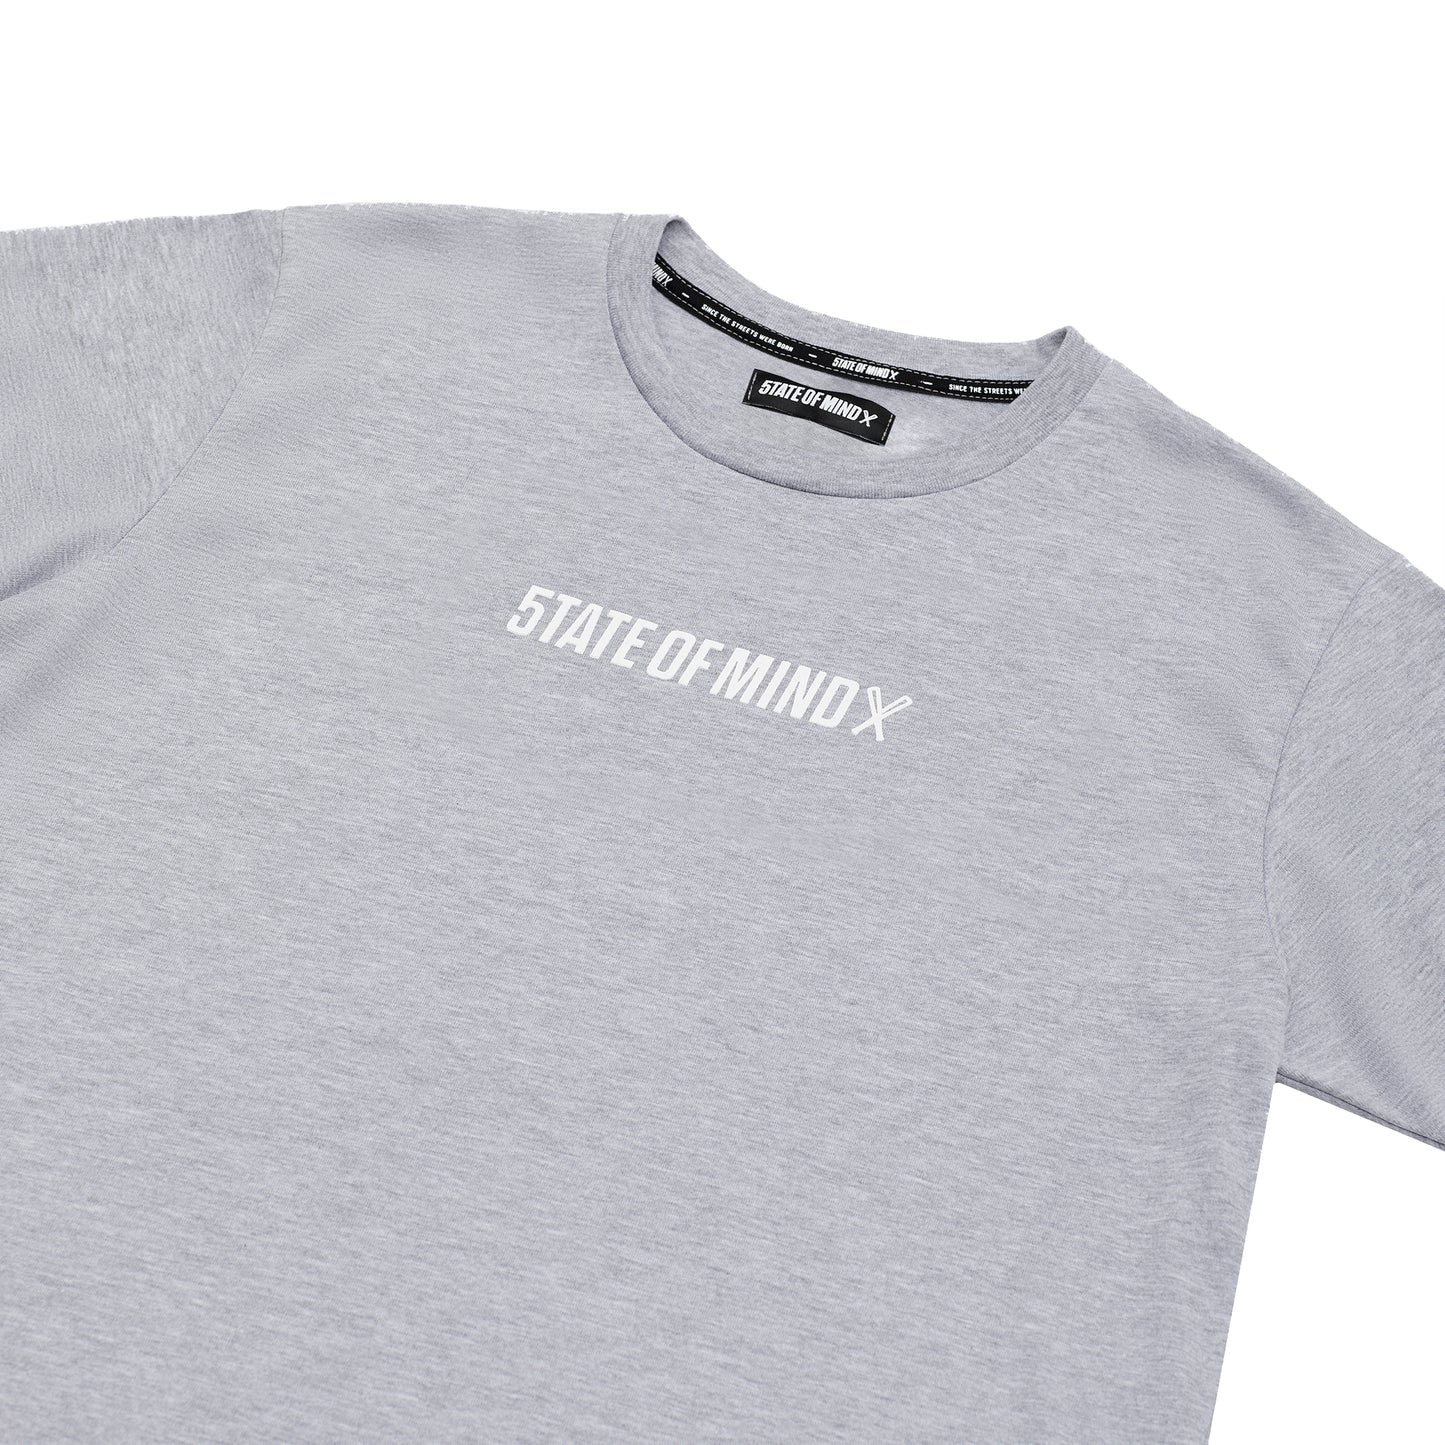 "BOX LOGO" t-shirt sport grey